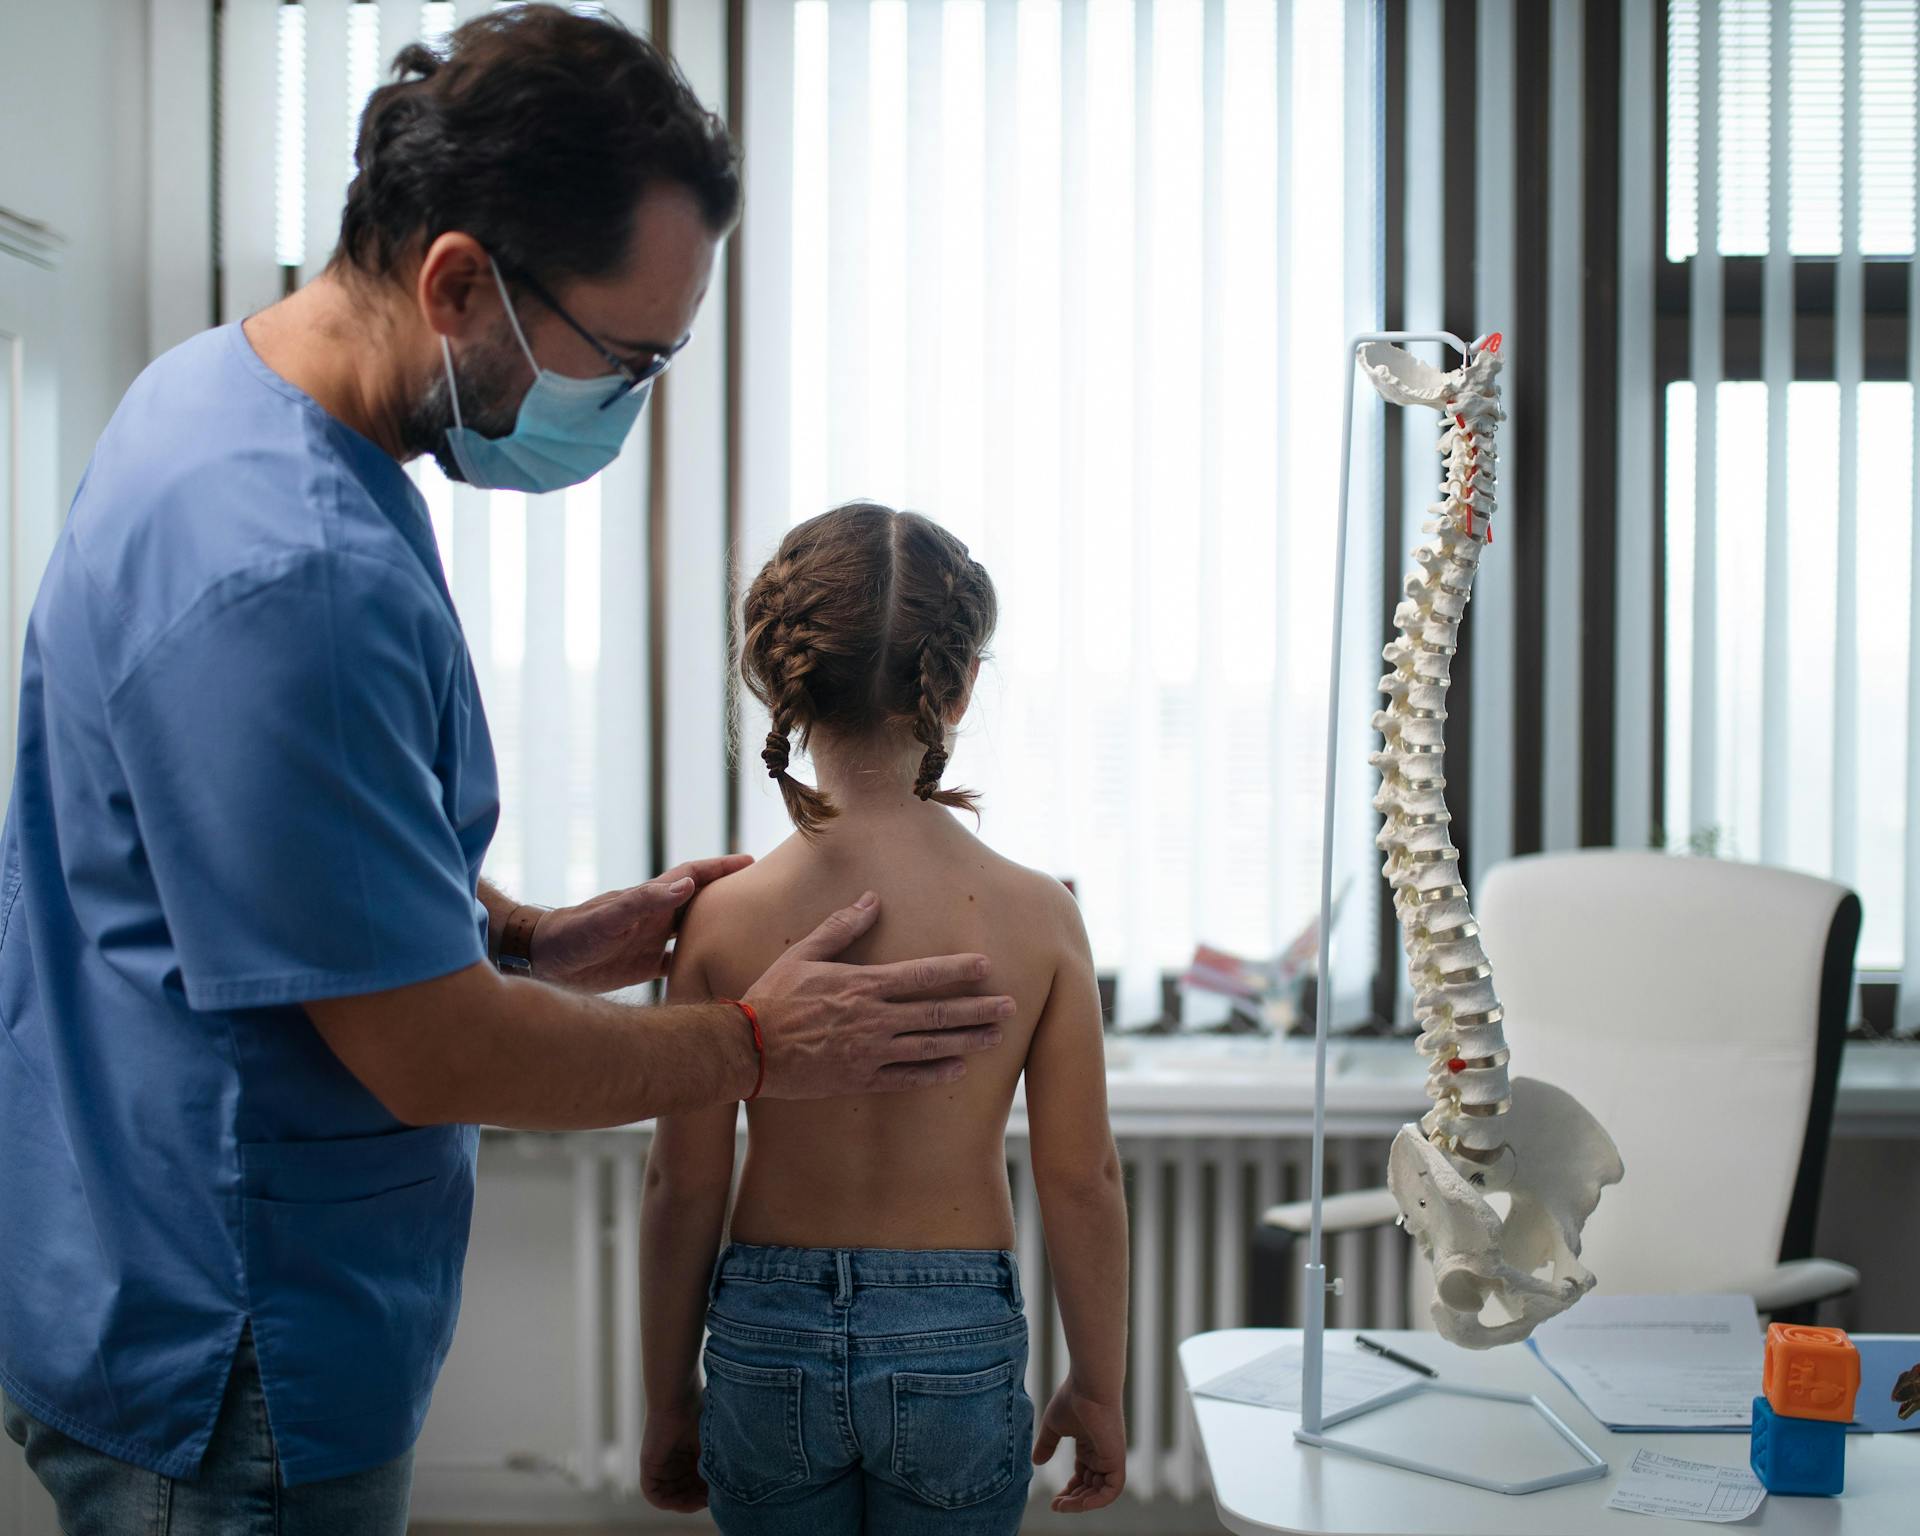 Child's back exam - scoliosis